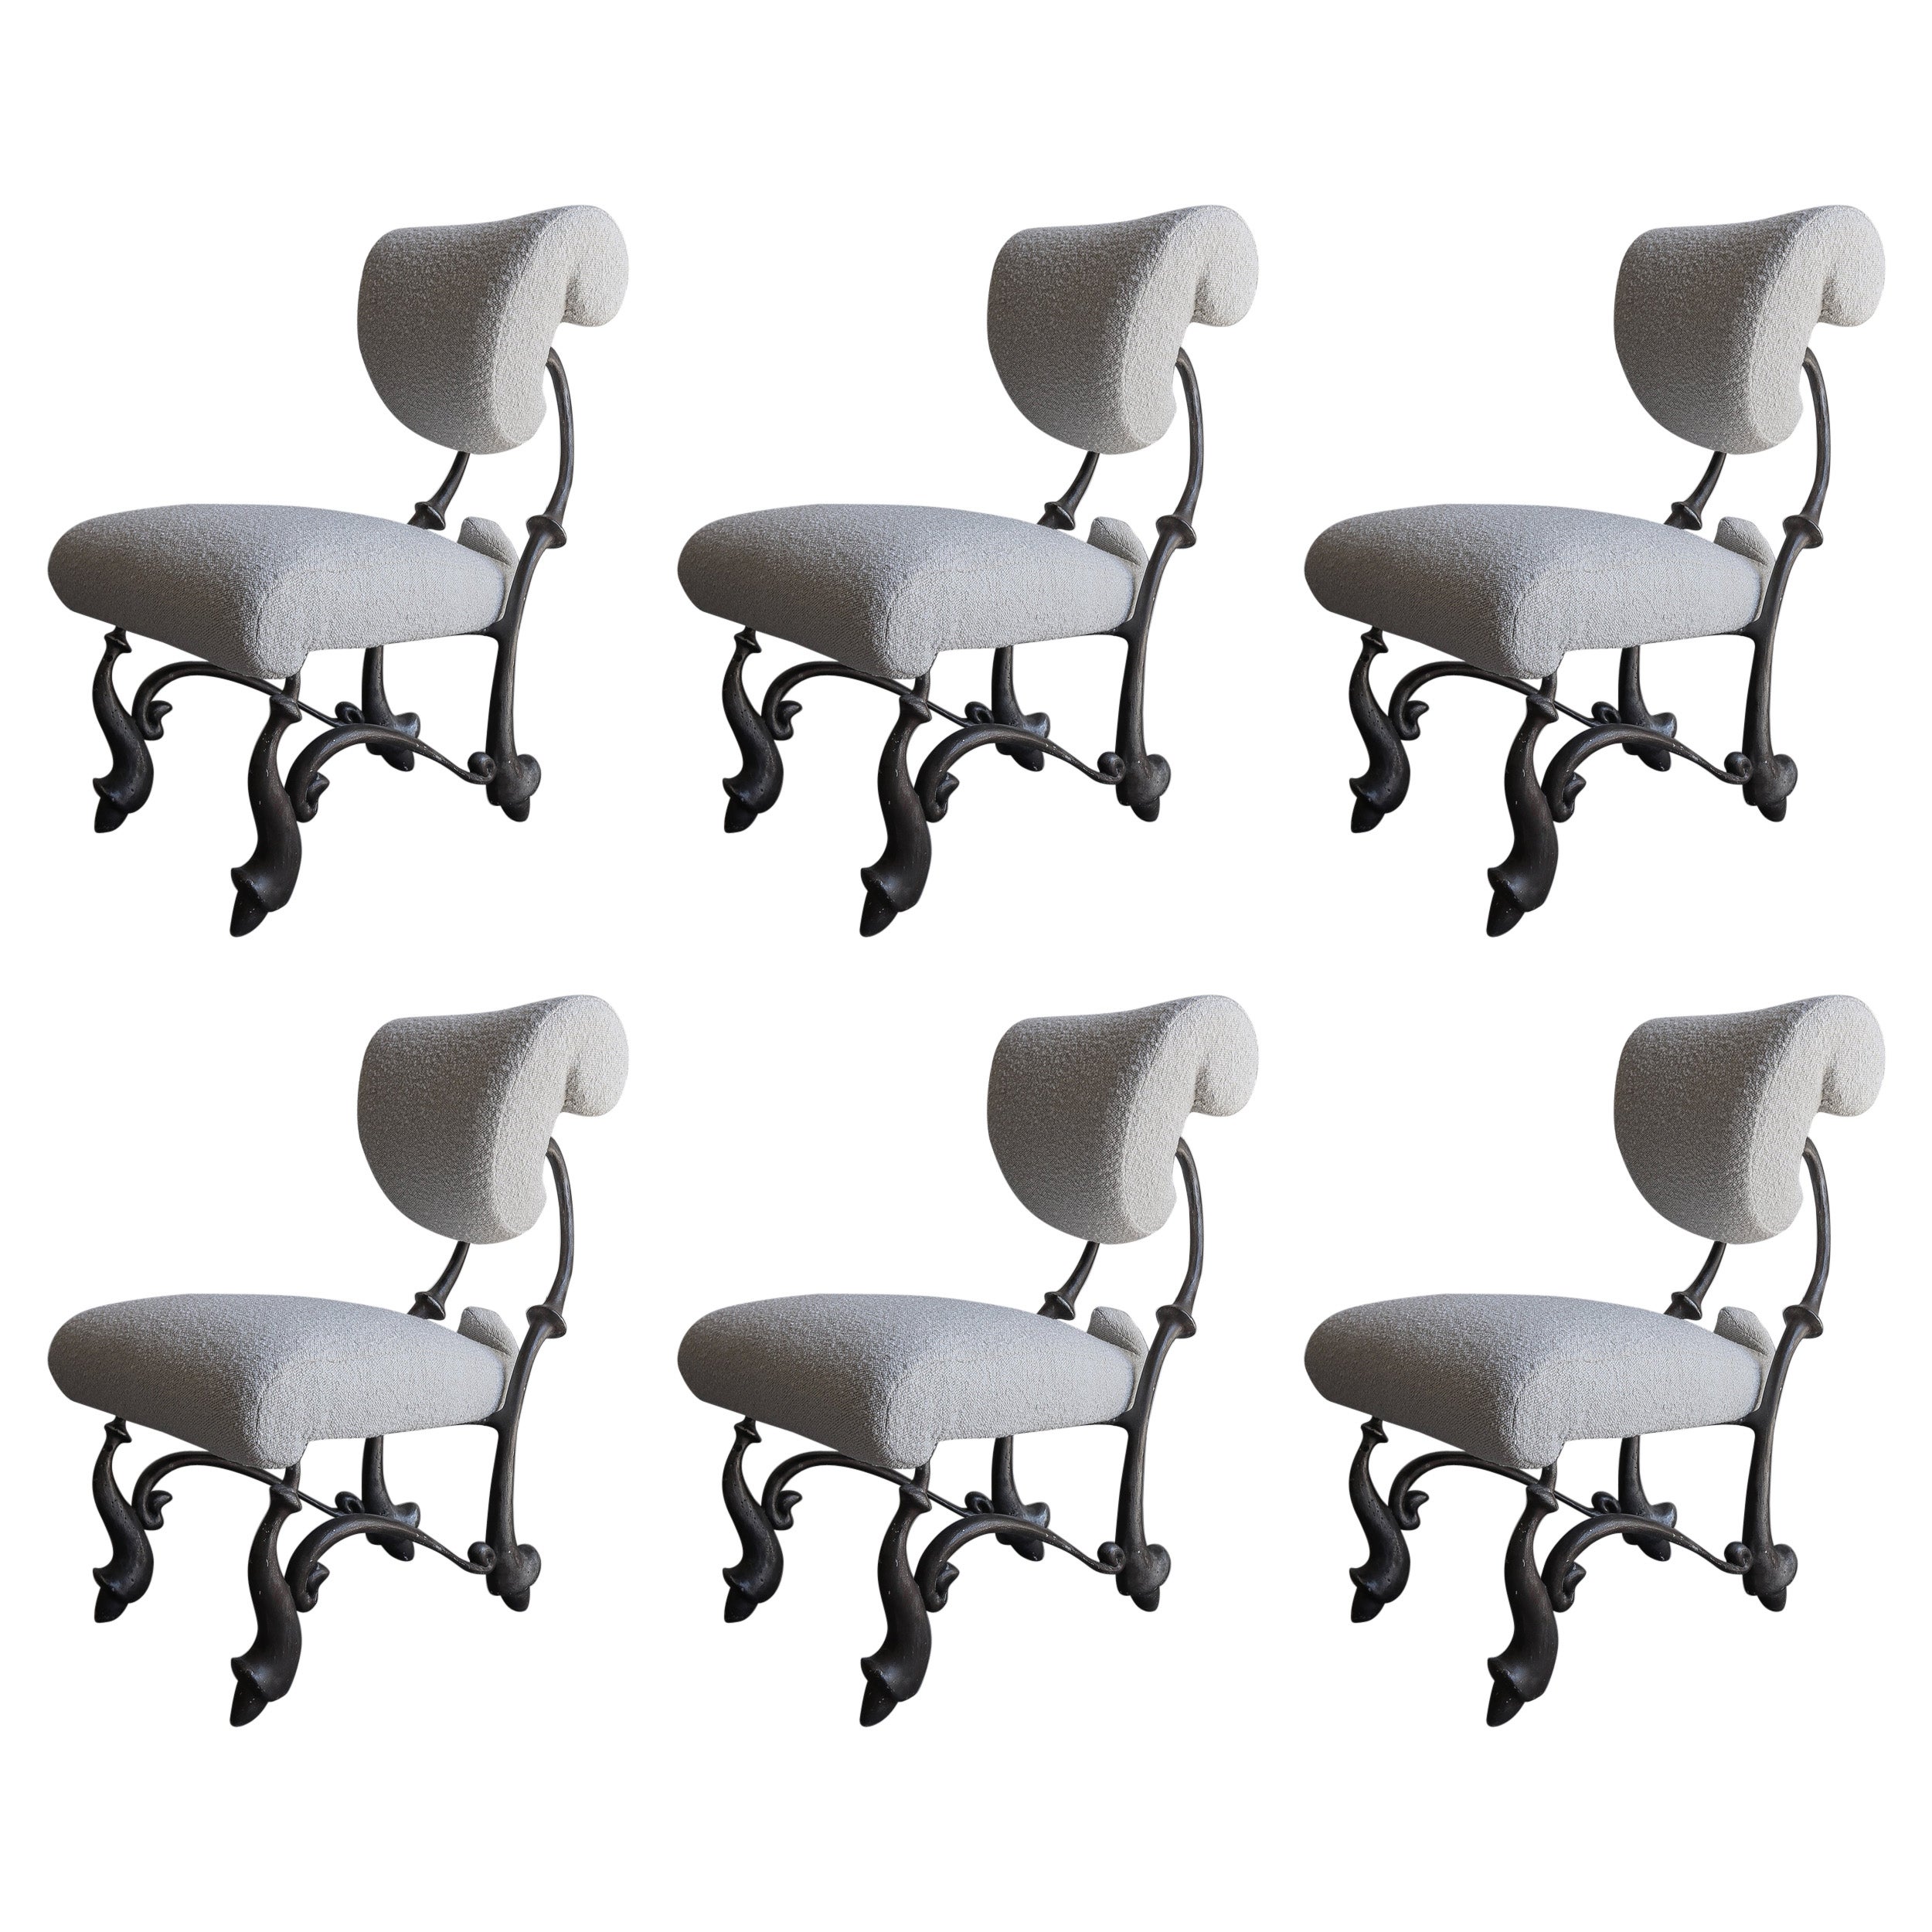 Iridium Ballet Chairs by Jordan Mozer, Set of 6